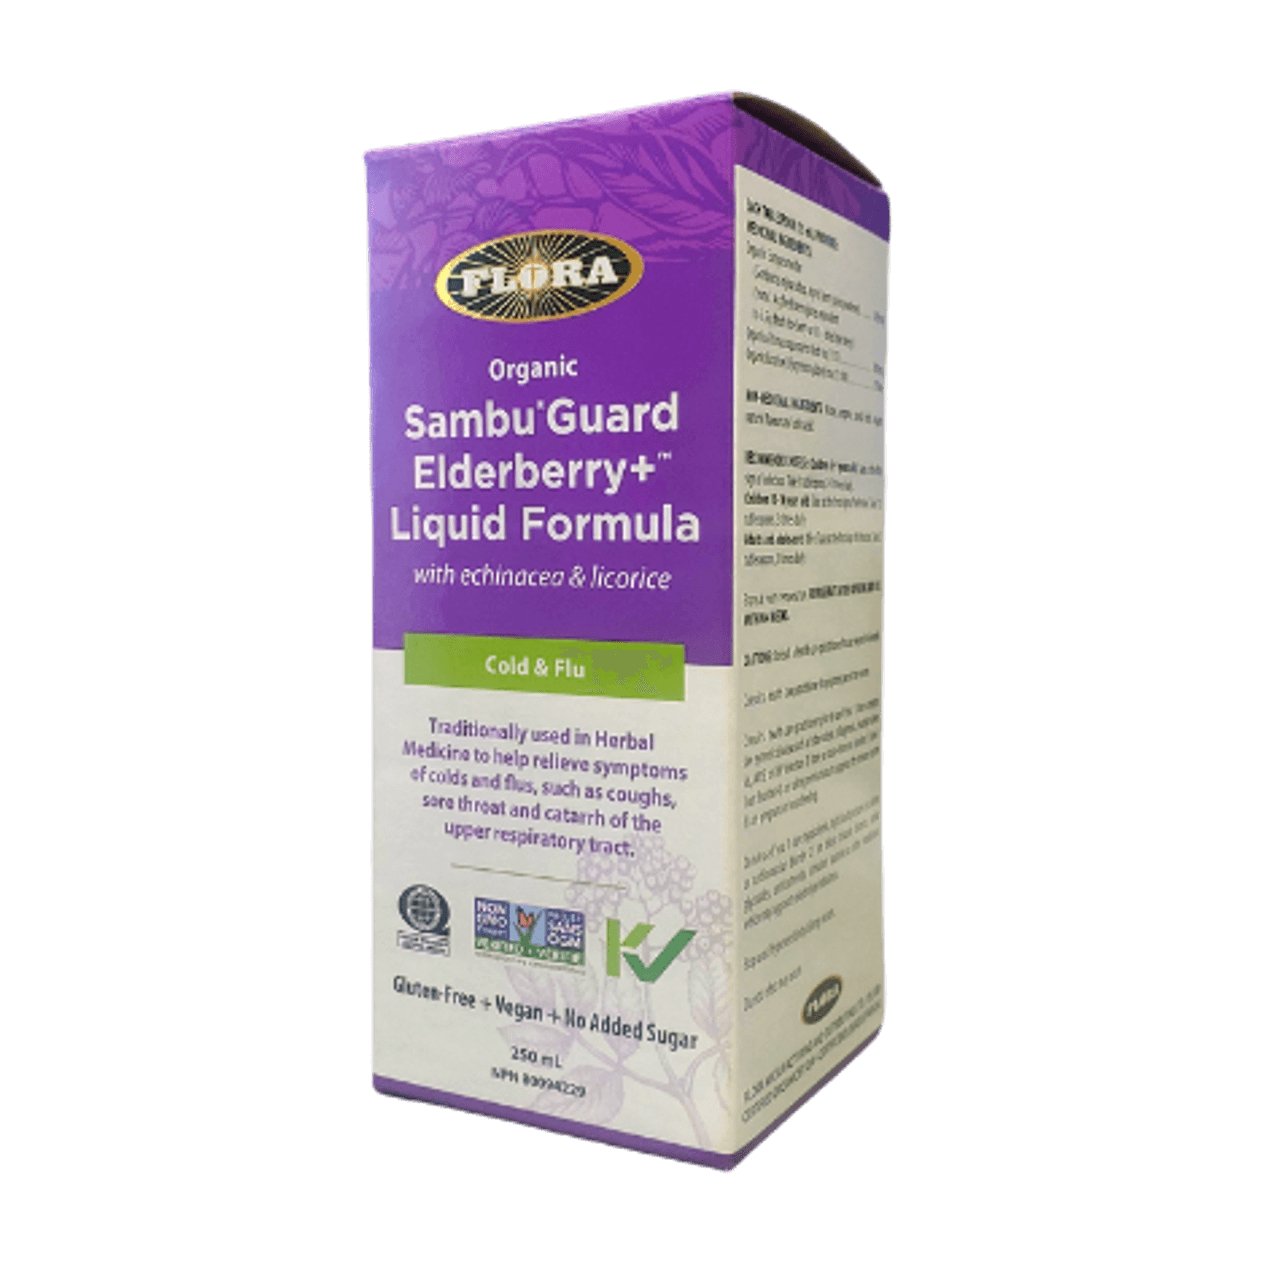 Flora Organic Sambu Guard Elderberry+ Liquid Formula 250mL - Nutrition Plus